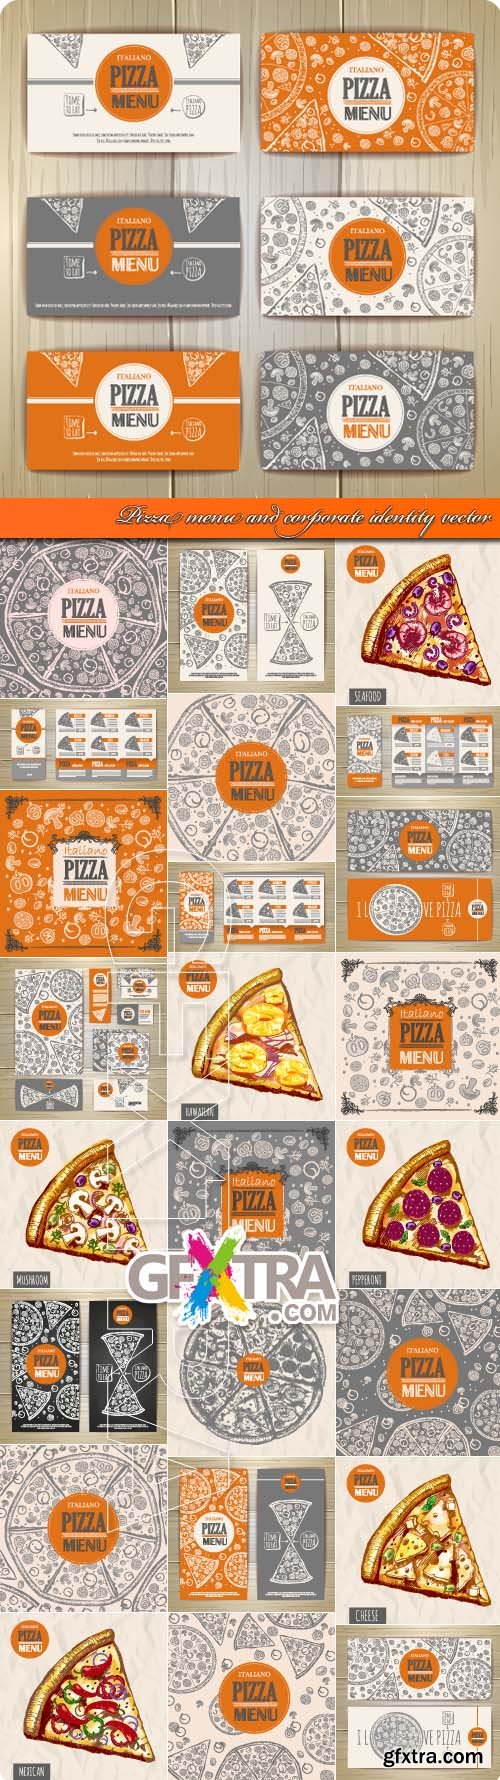 Pizza menu and corporate identity vector